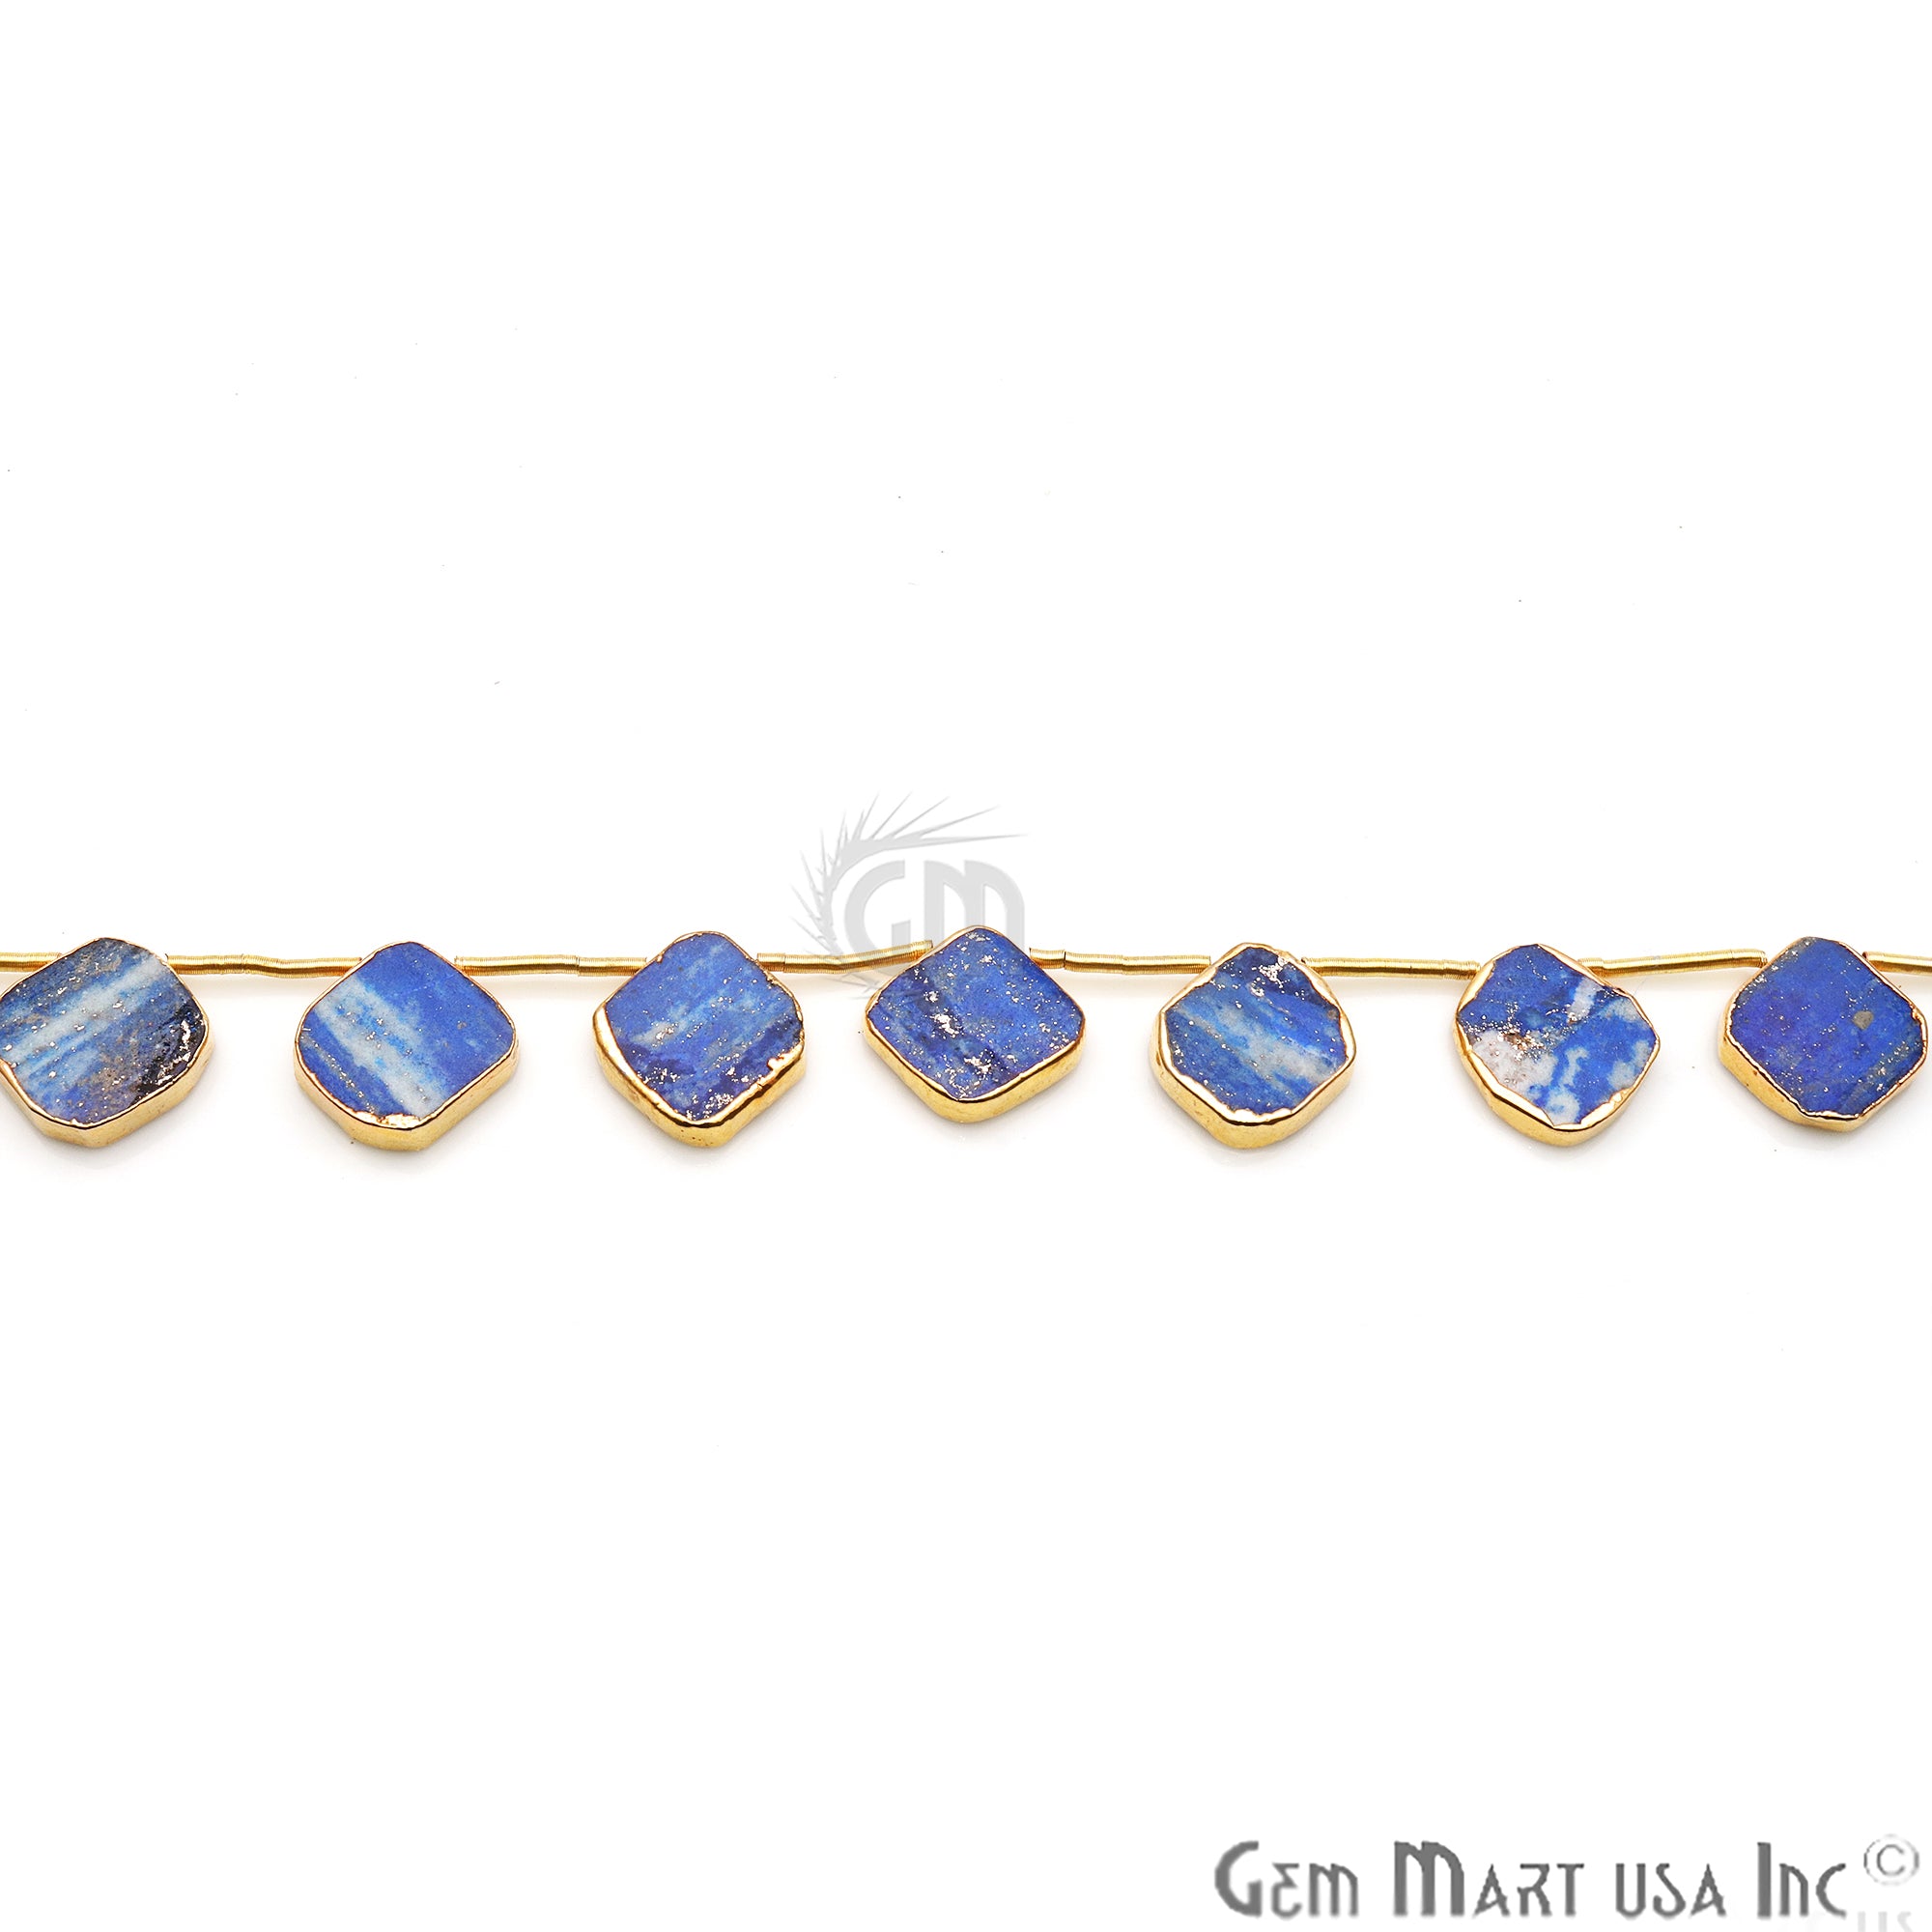 Lapis Free Form Gold Electroplated 18x15mm Crafting Beads Gemstone 9 Inch Strands - GemMartUSA